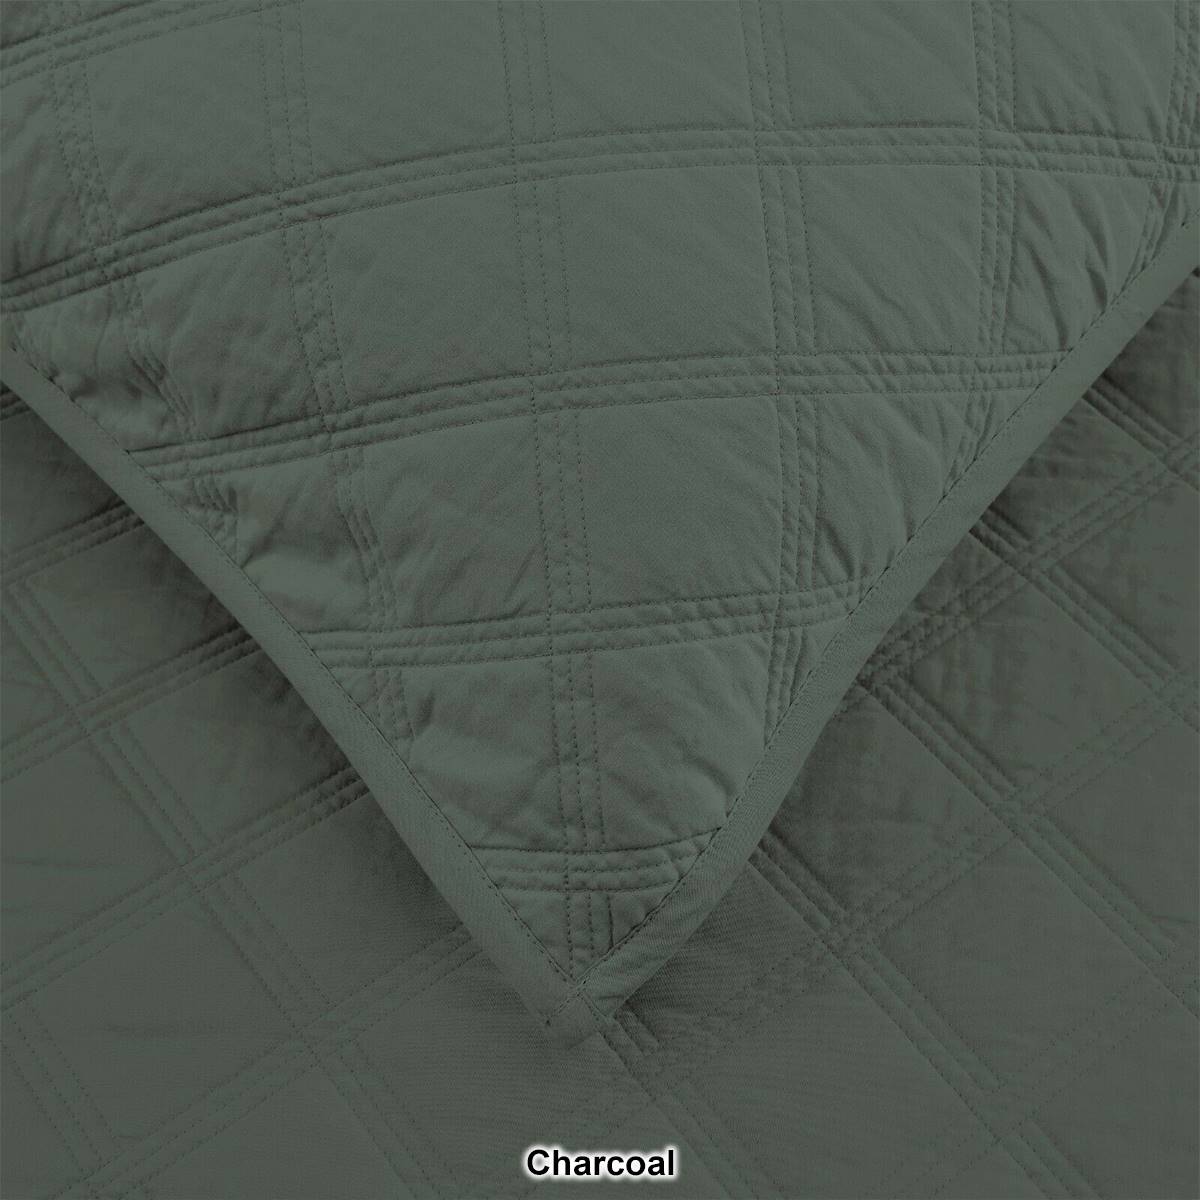 EnvioHome 100% Cotton Solid Quilt Twin Size Bedding Set